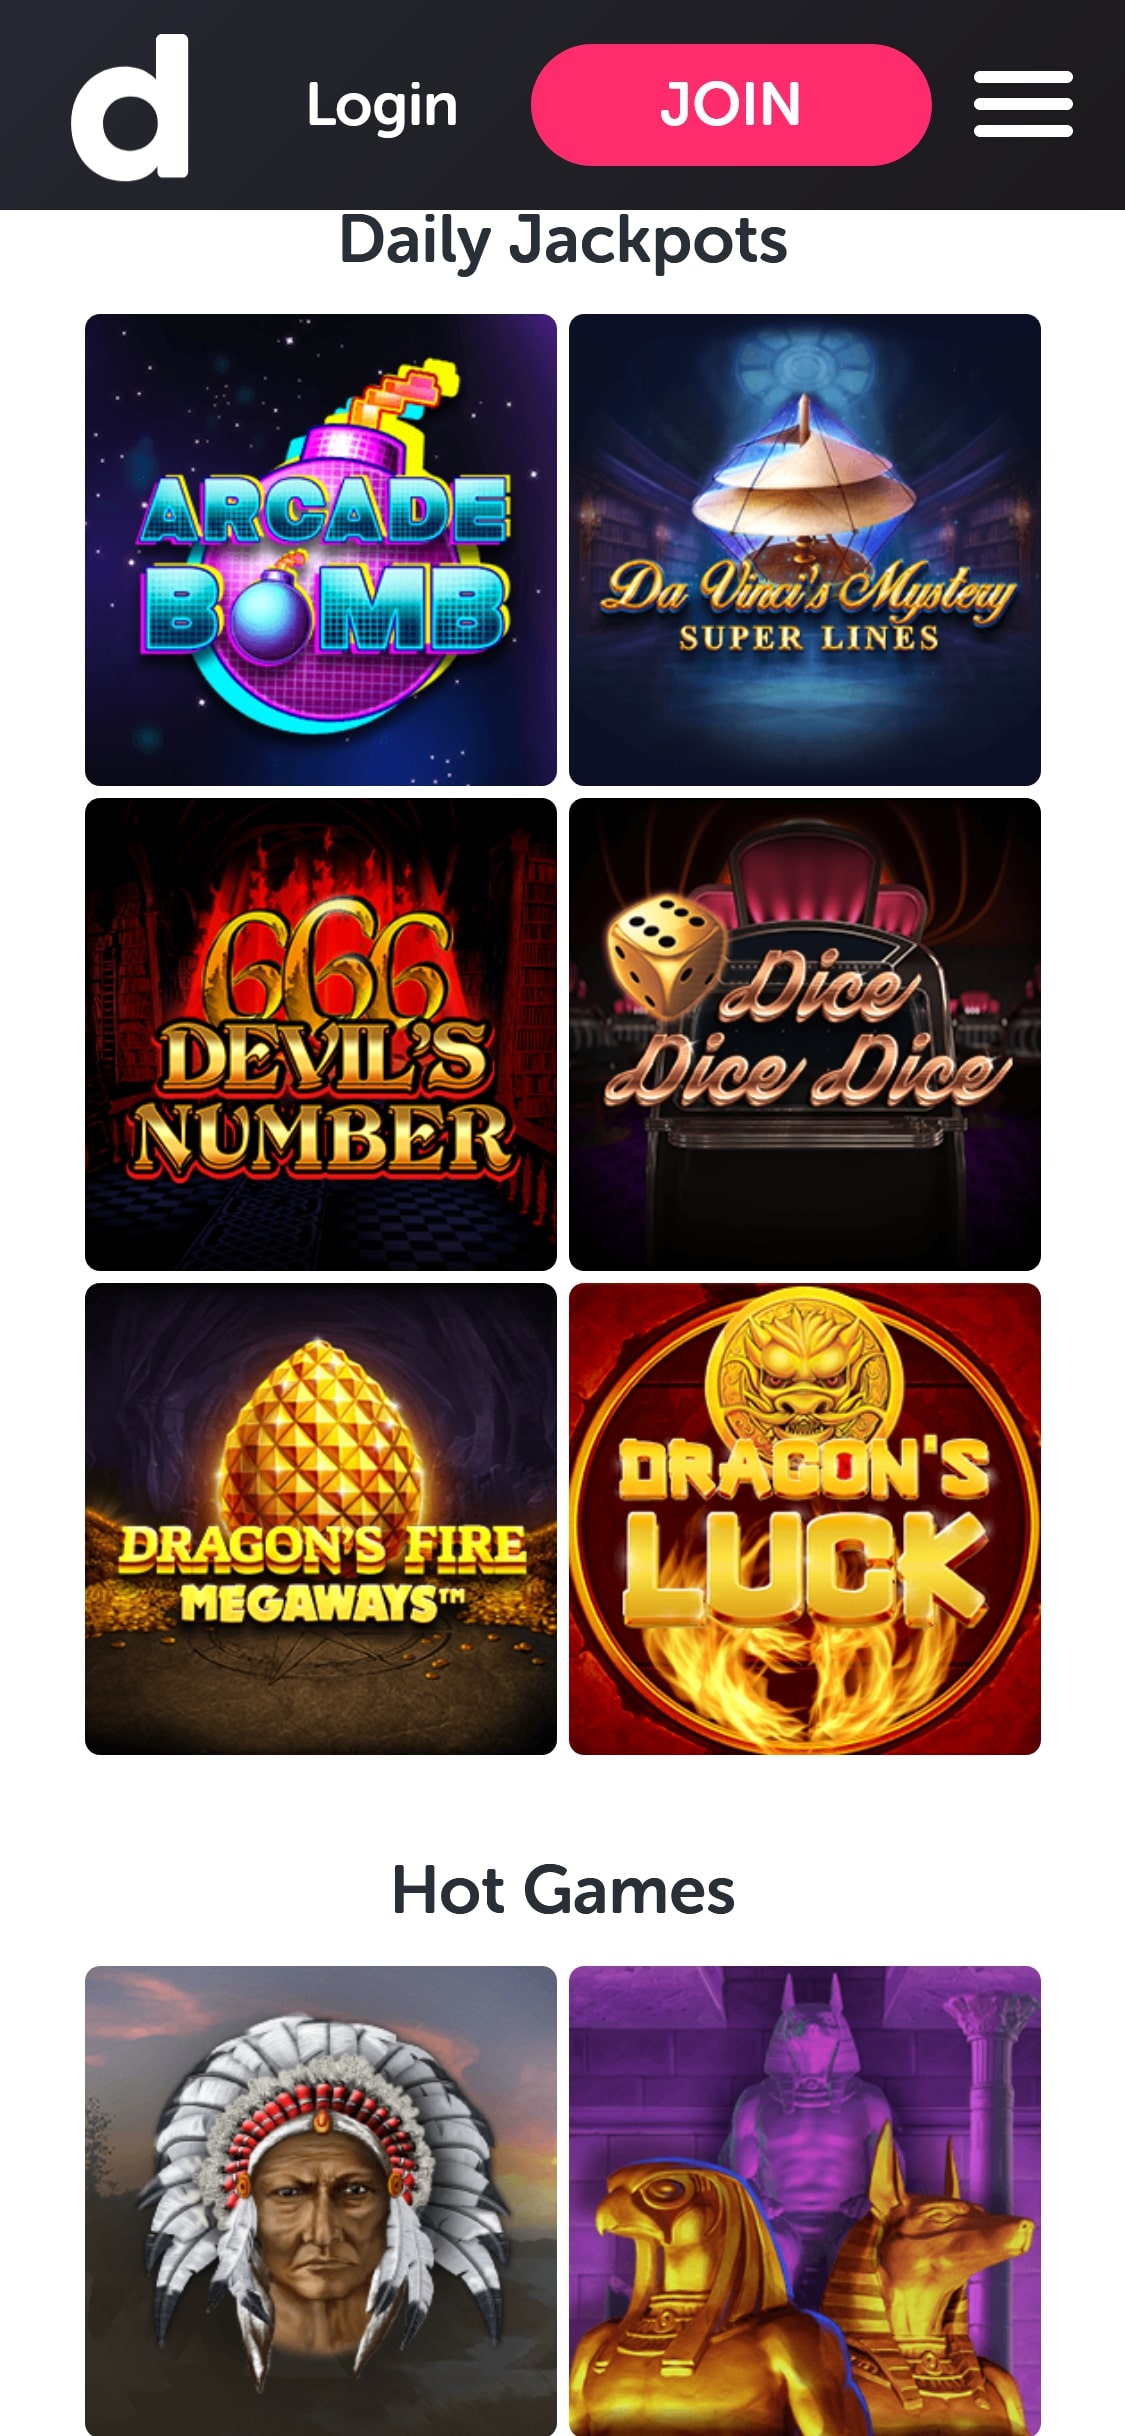 Dabber Bingo Casino Mobile Games Review